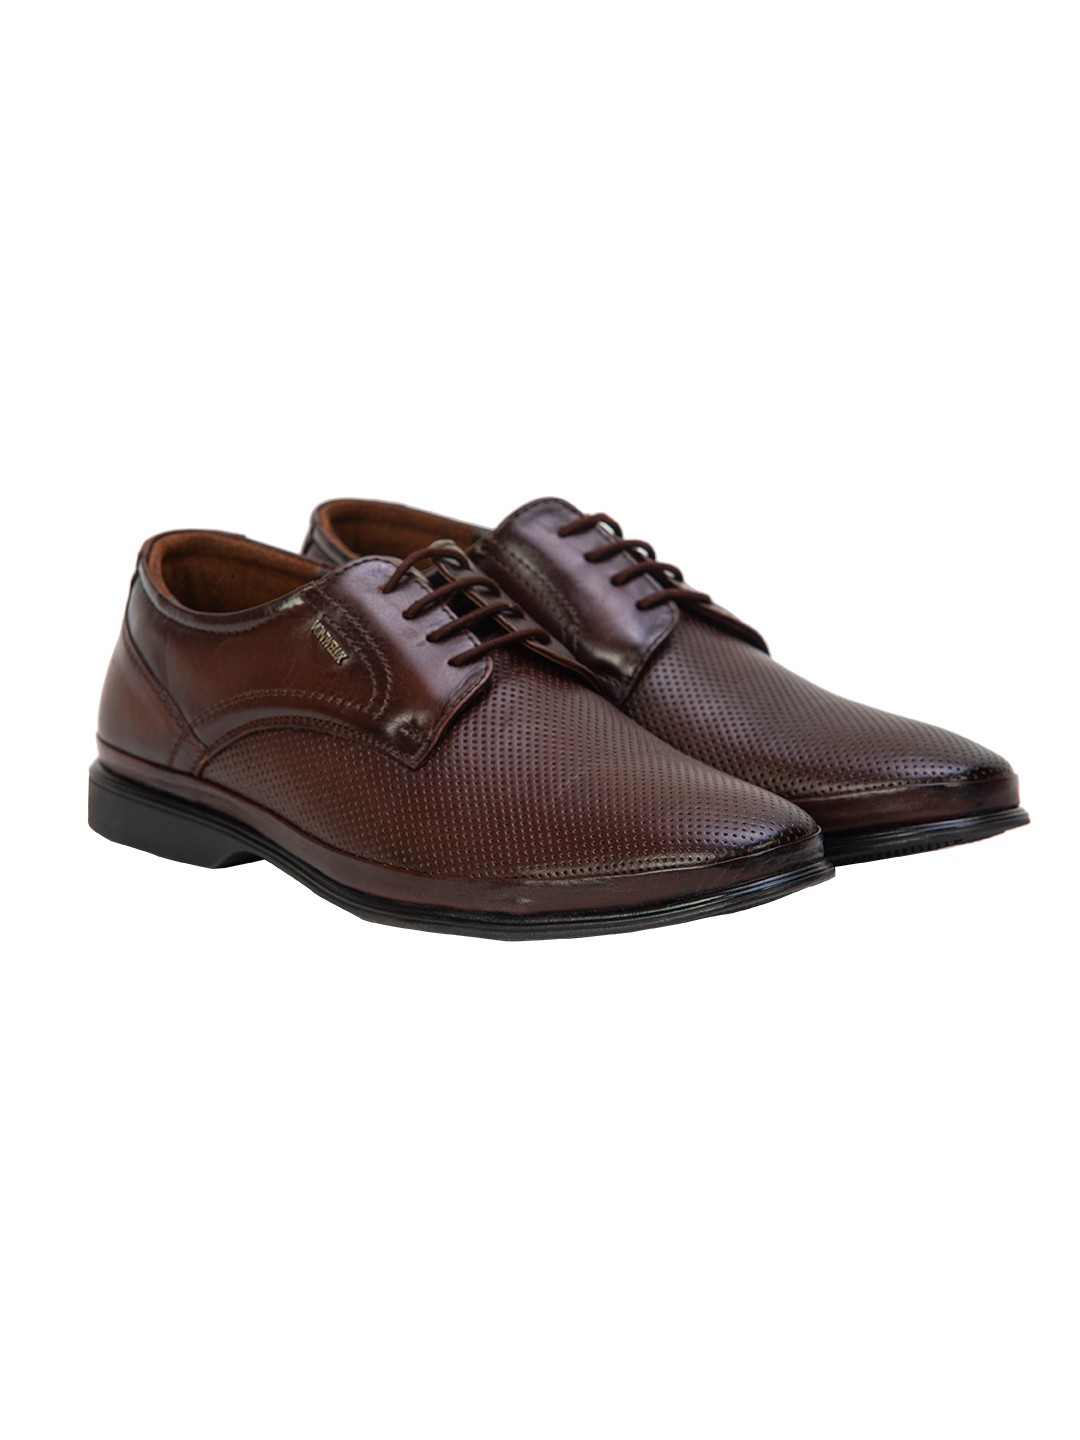 Buy Von Wellx Germany Comfort Coen Brown Shoes Online in Thane